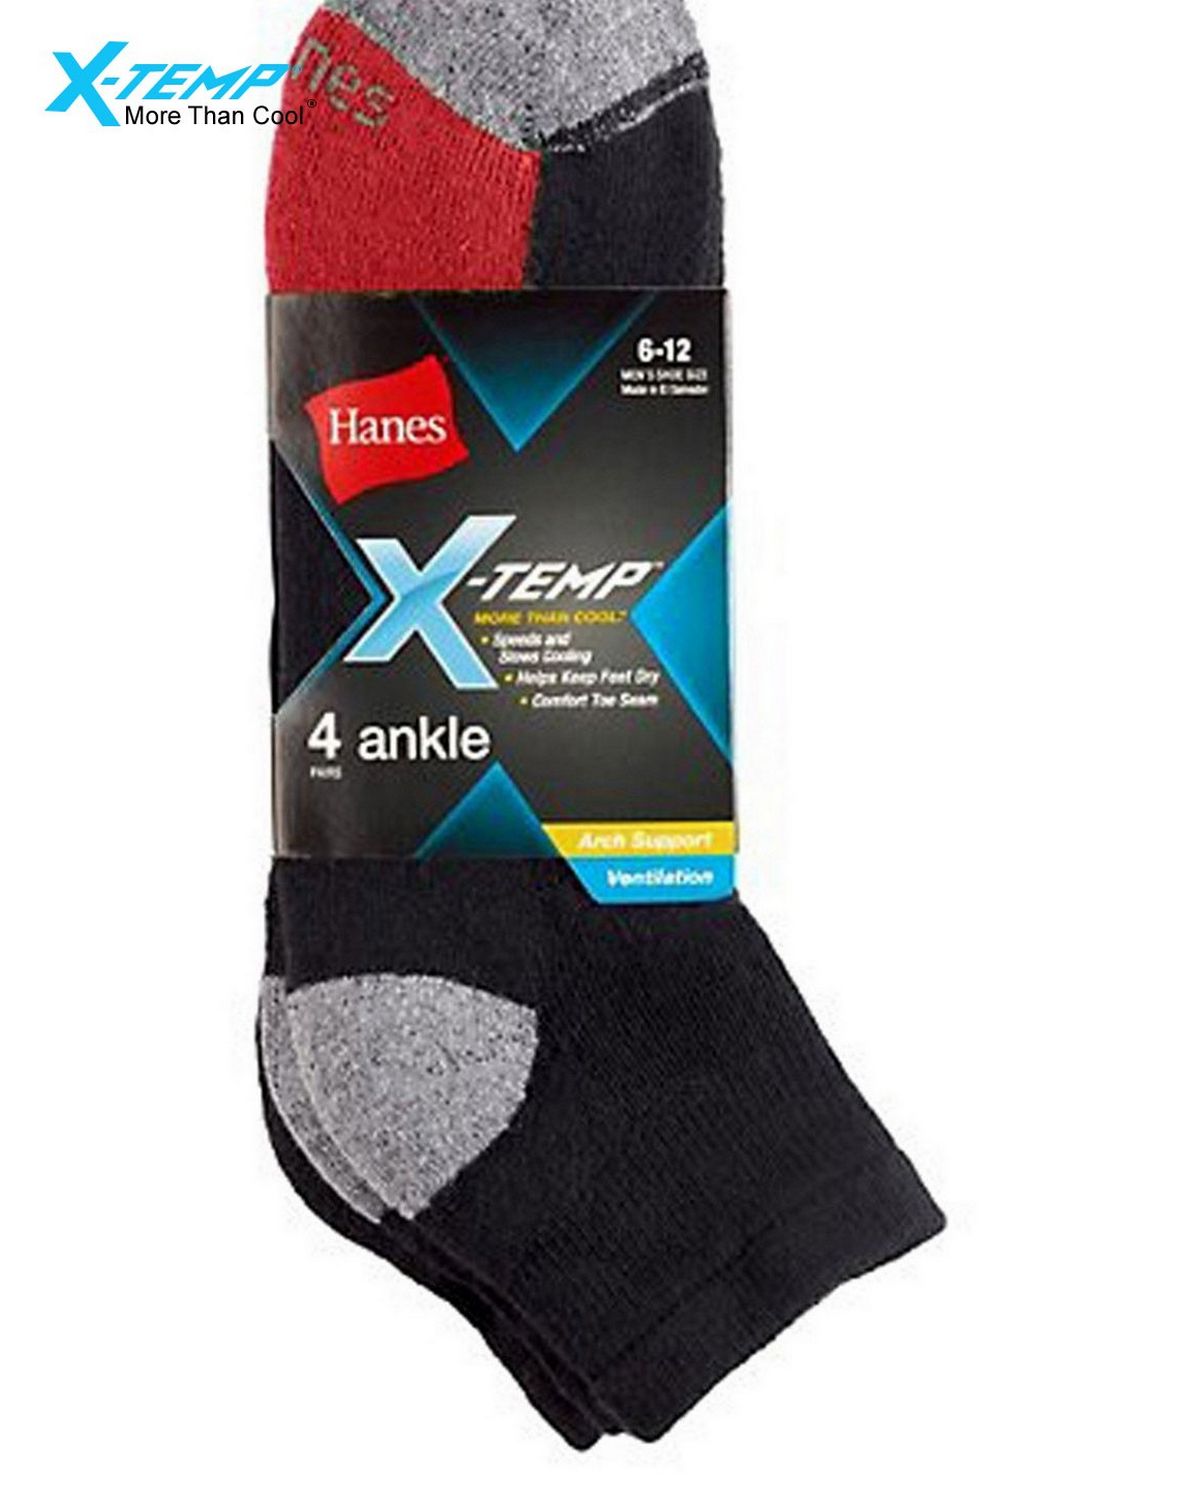 Hanes 516L4 Mens X-Temp Ventilation Ankle Socks 4 Pack